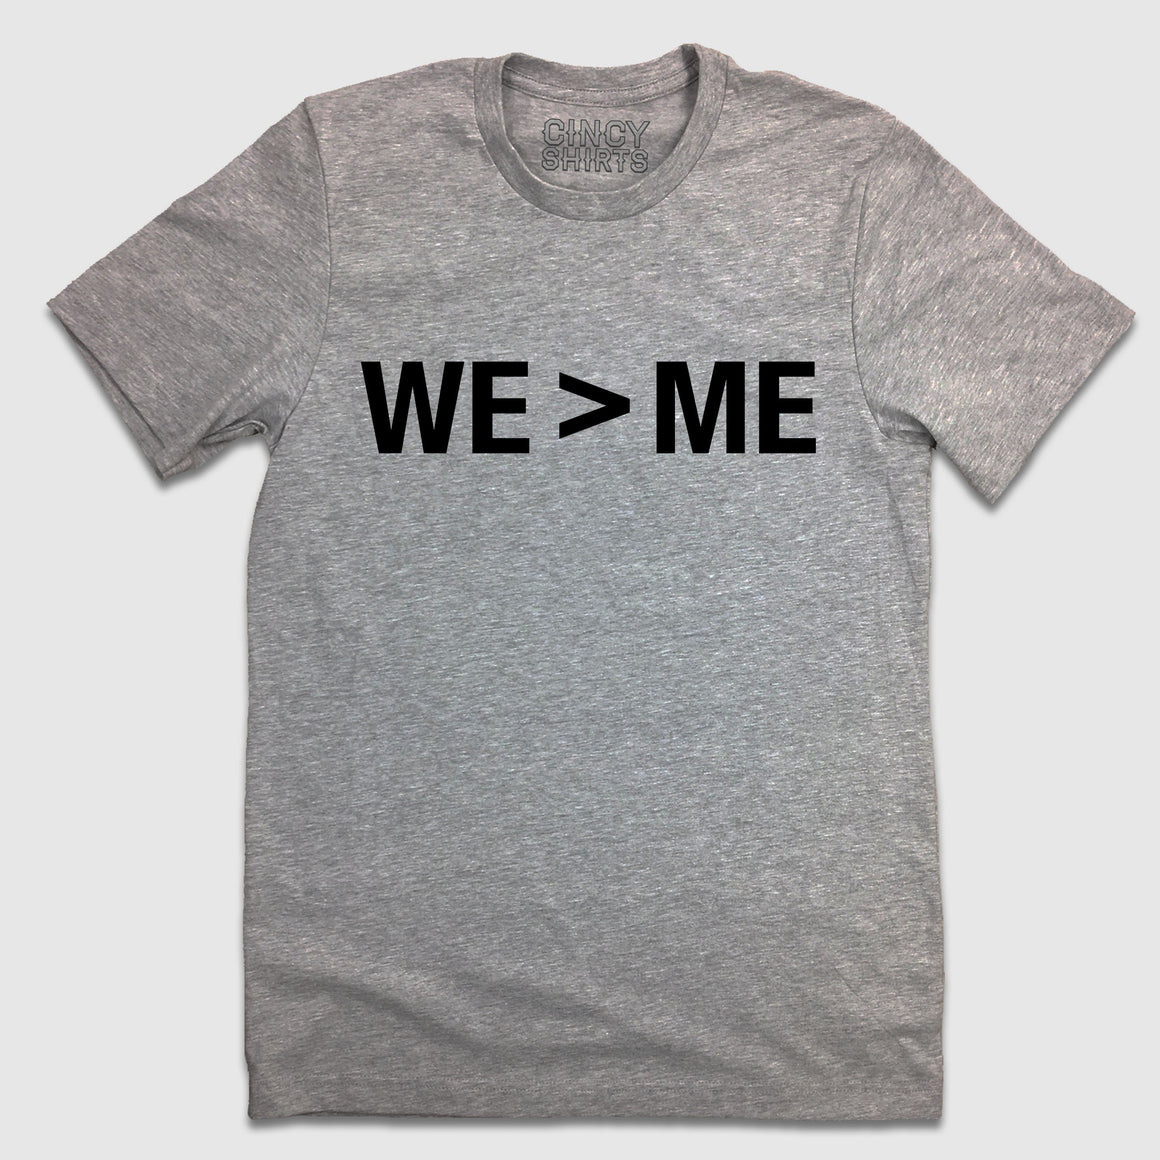 We > Me - Cincy Shirts